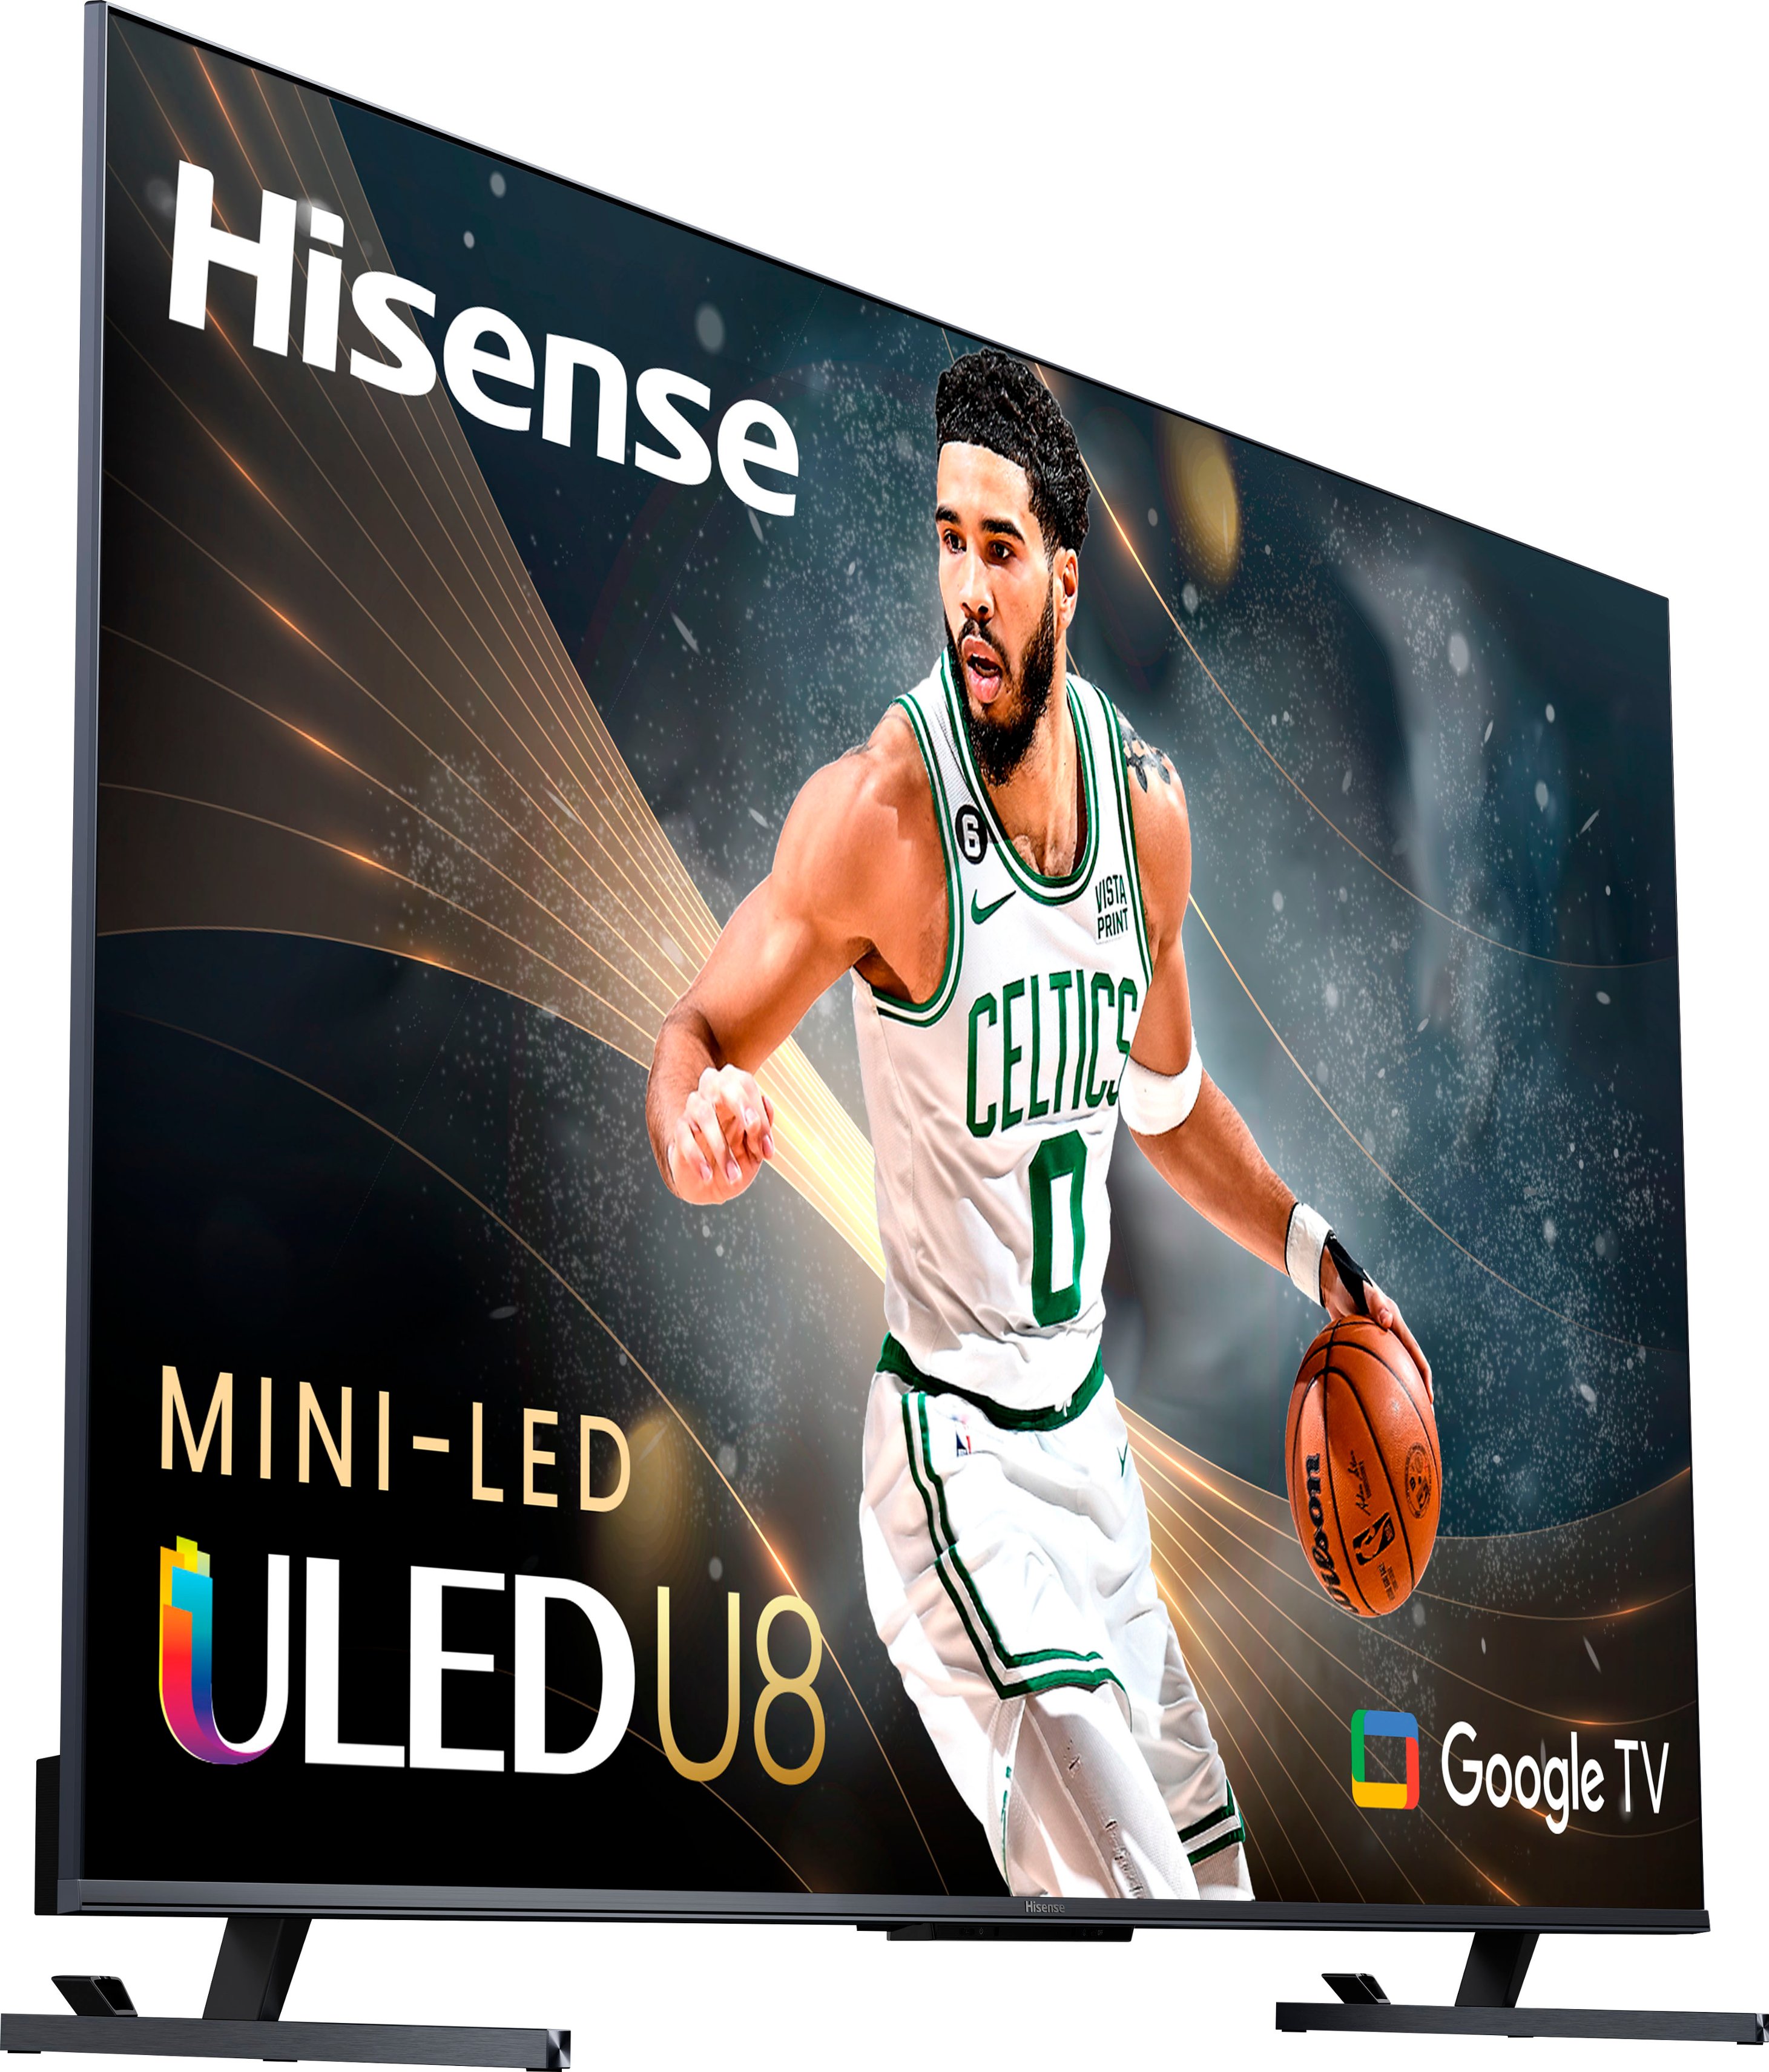 Hisense 55-Inch Class U8 Series Mini-LED ULED 4K UHD Google Smart TV  (55U8K) - QLED, Native 144Hz, 1500-Nit, Dolby Vision IQ, Full Array Local  Dimming, Game Mode Pro, Alexa Compatibility